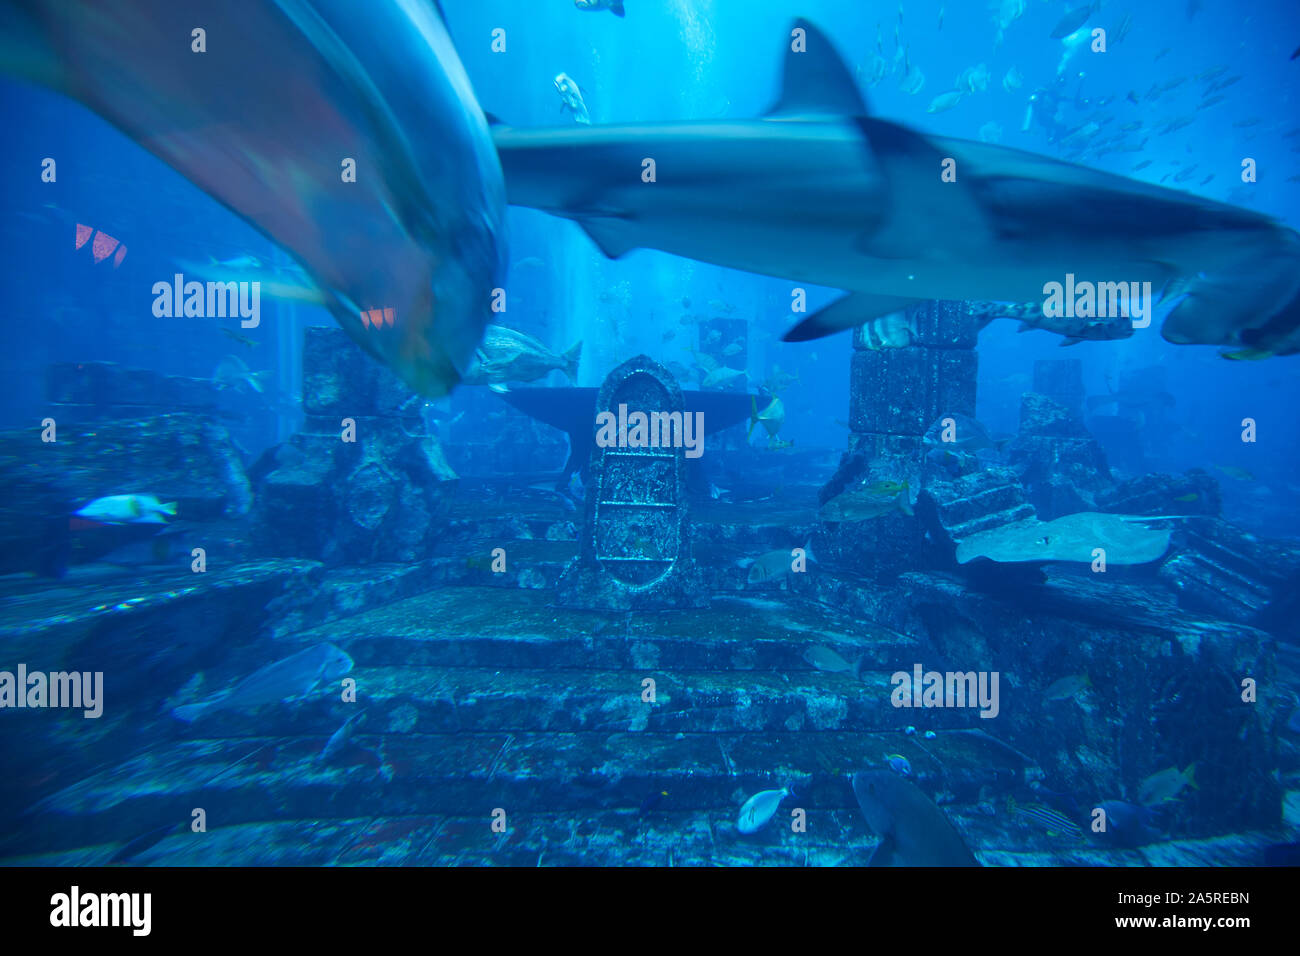 Acuario y Zoológico en submarino Atlantis Palm, Dubai, Emiratos Árabes Unidos. Foto de stock